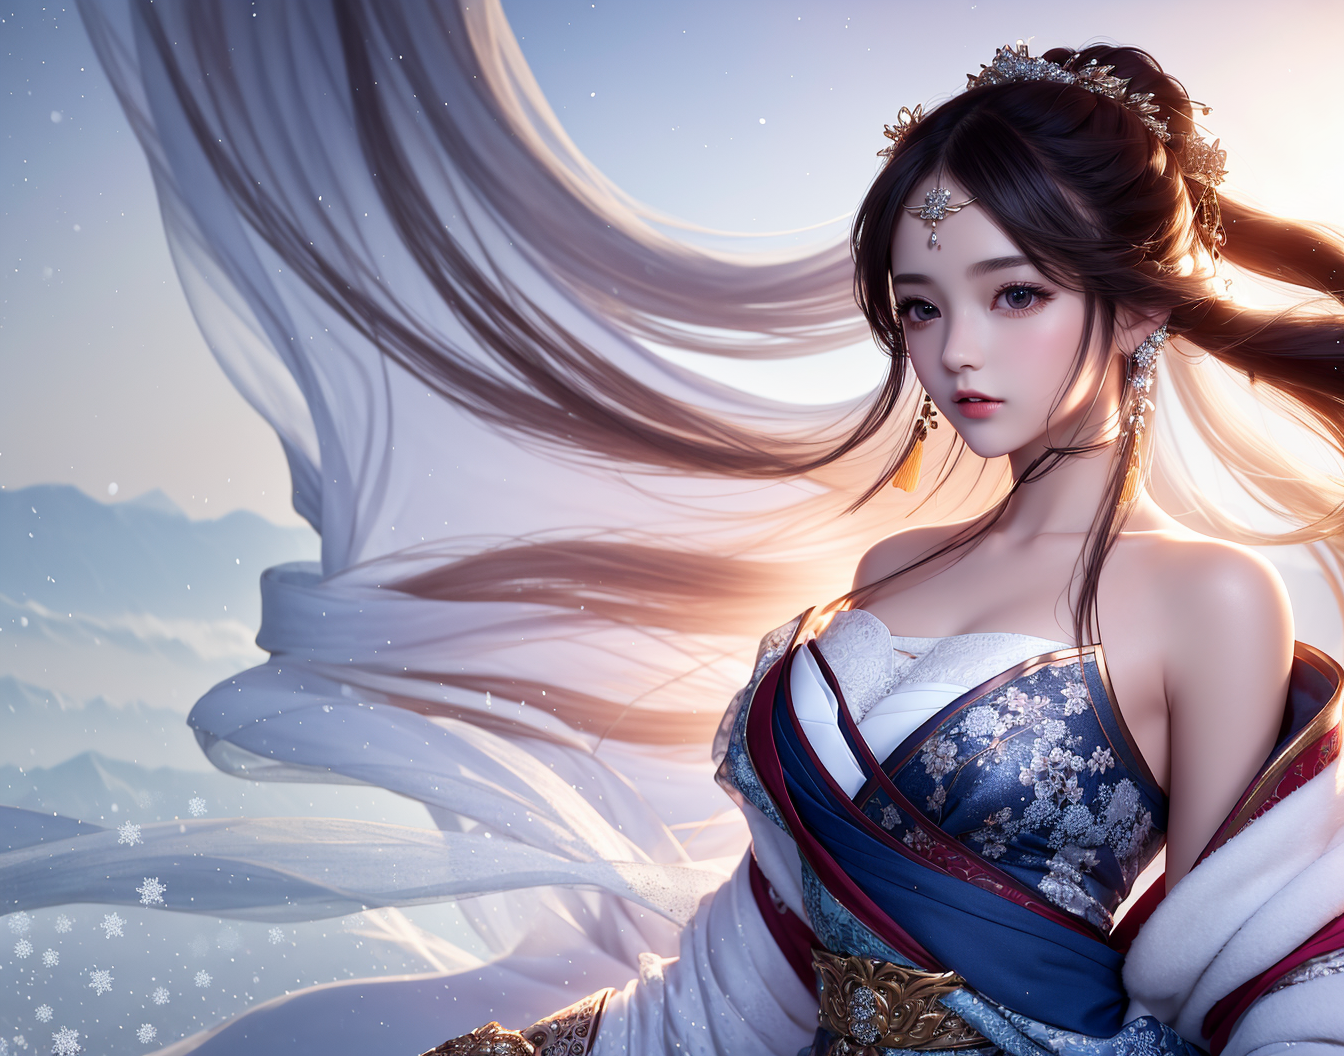 Ai Art Women Asian Dress Jewelry Snowflakes Long Hair Tiaras 1344x1056